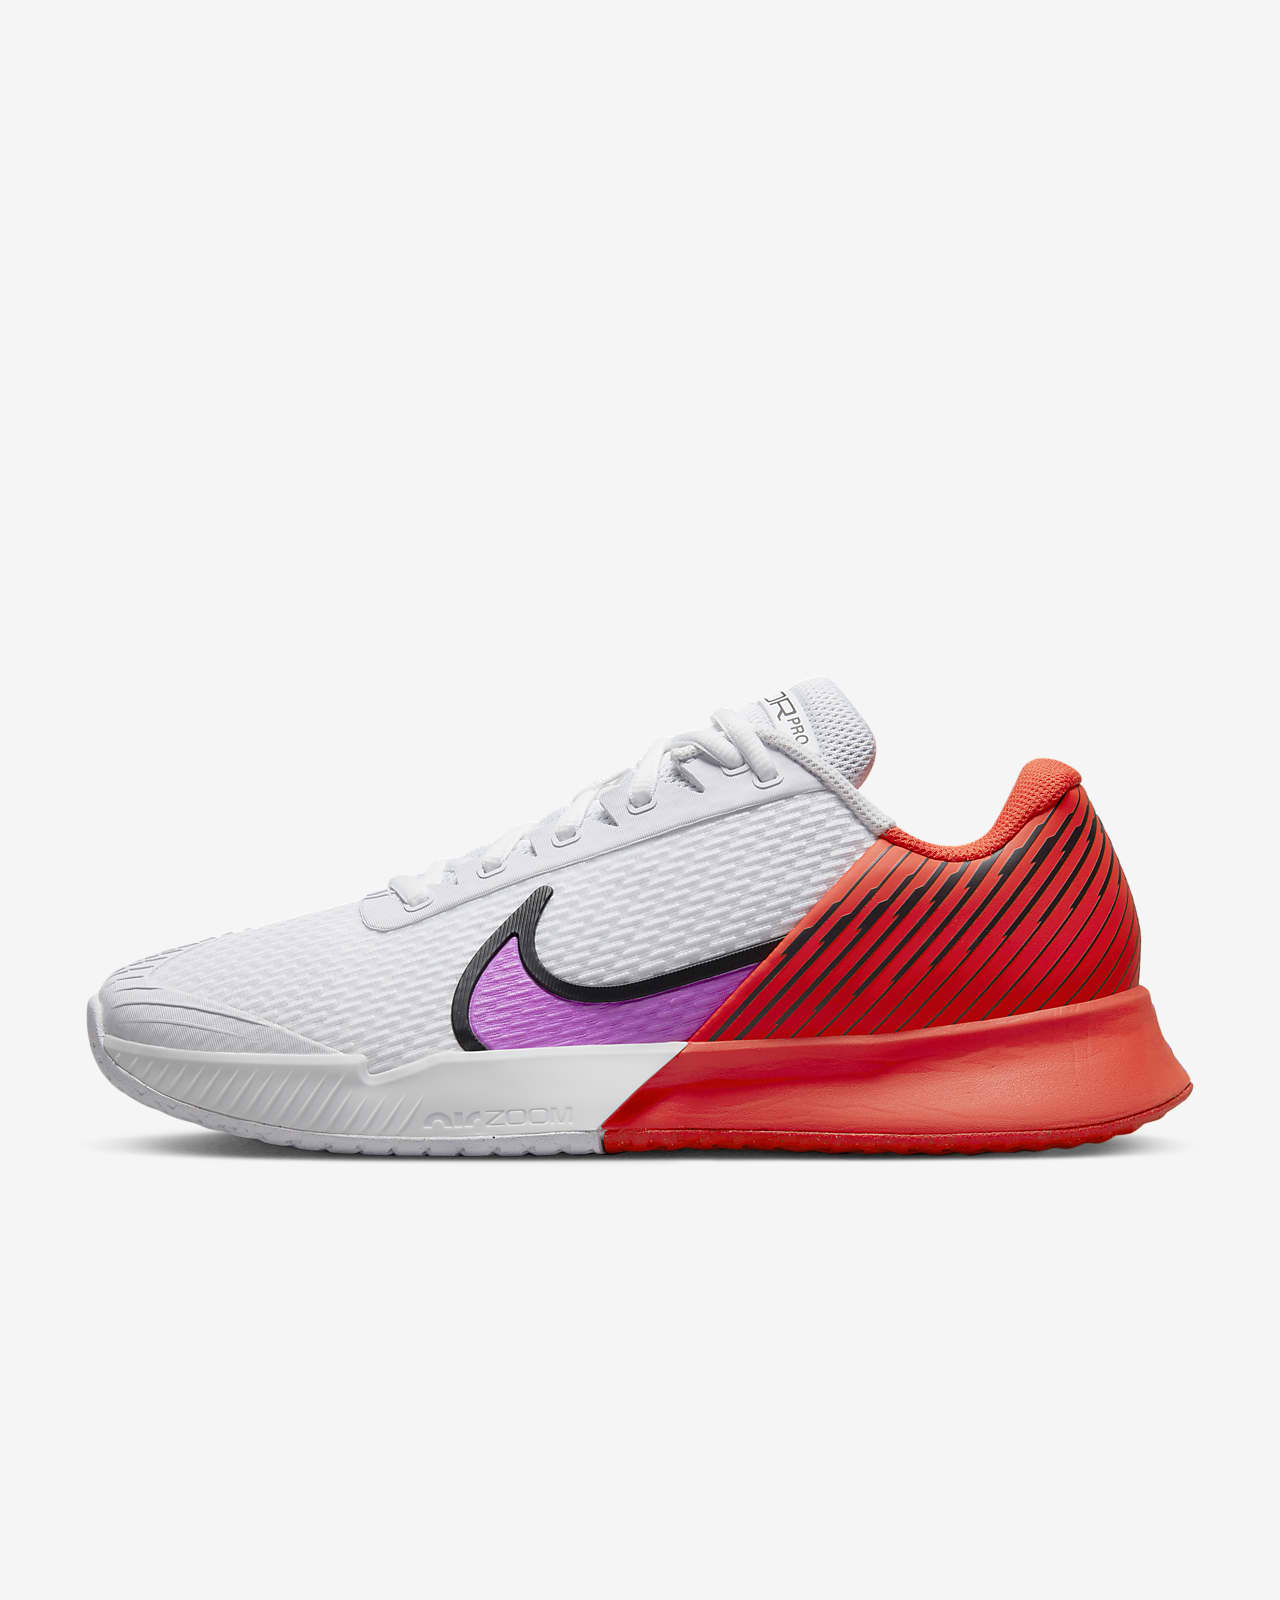 NikeCourt Air Zoom Vapor Pro 2 男款硬地球場網球鞋